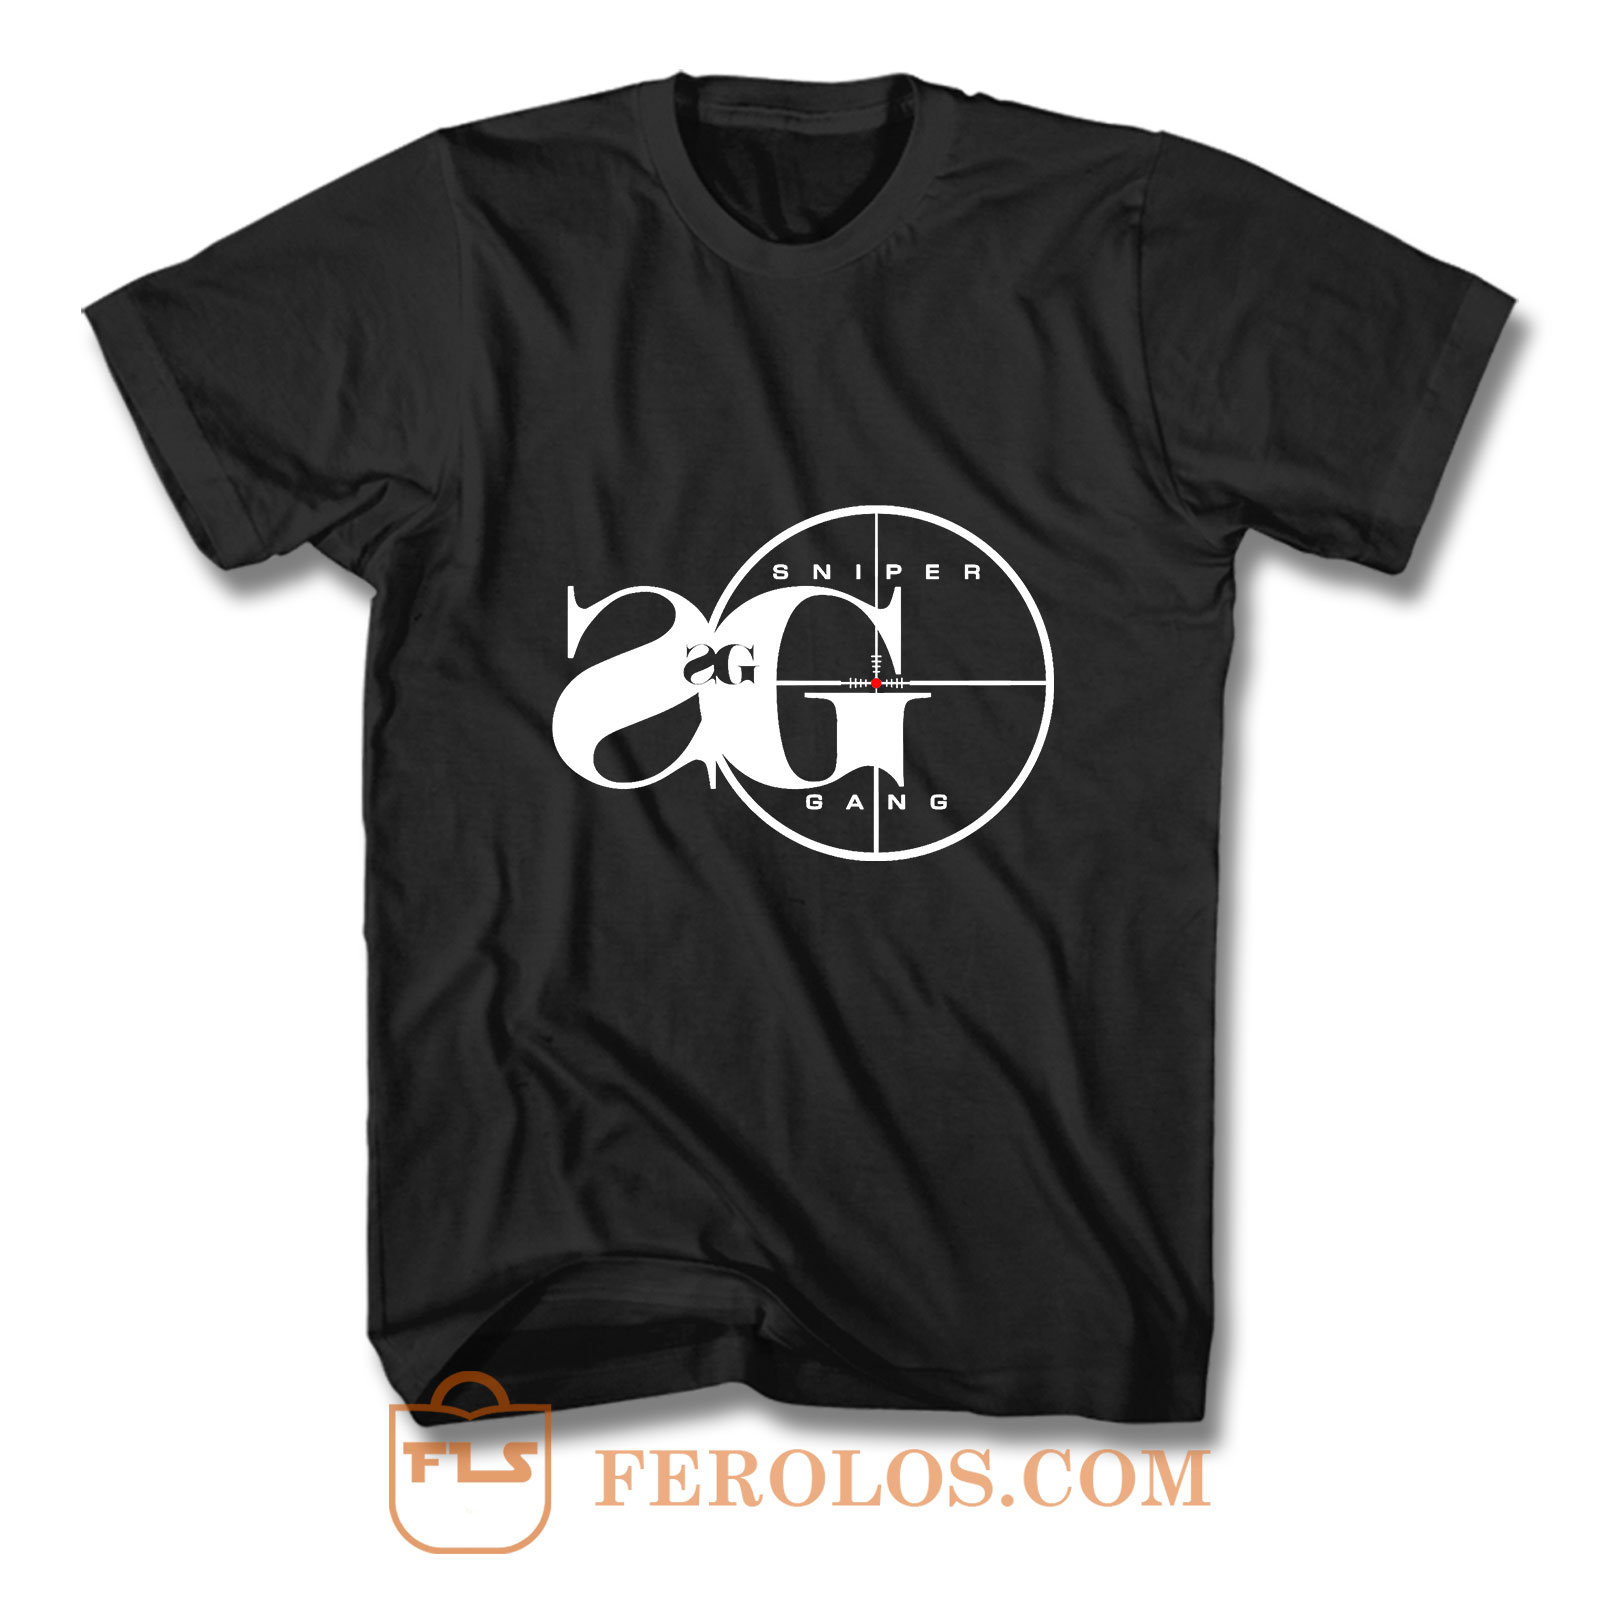 Sniper Gang Logo T Shirt | FEROLOS.COM